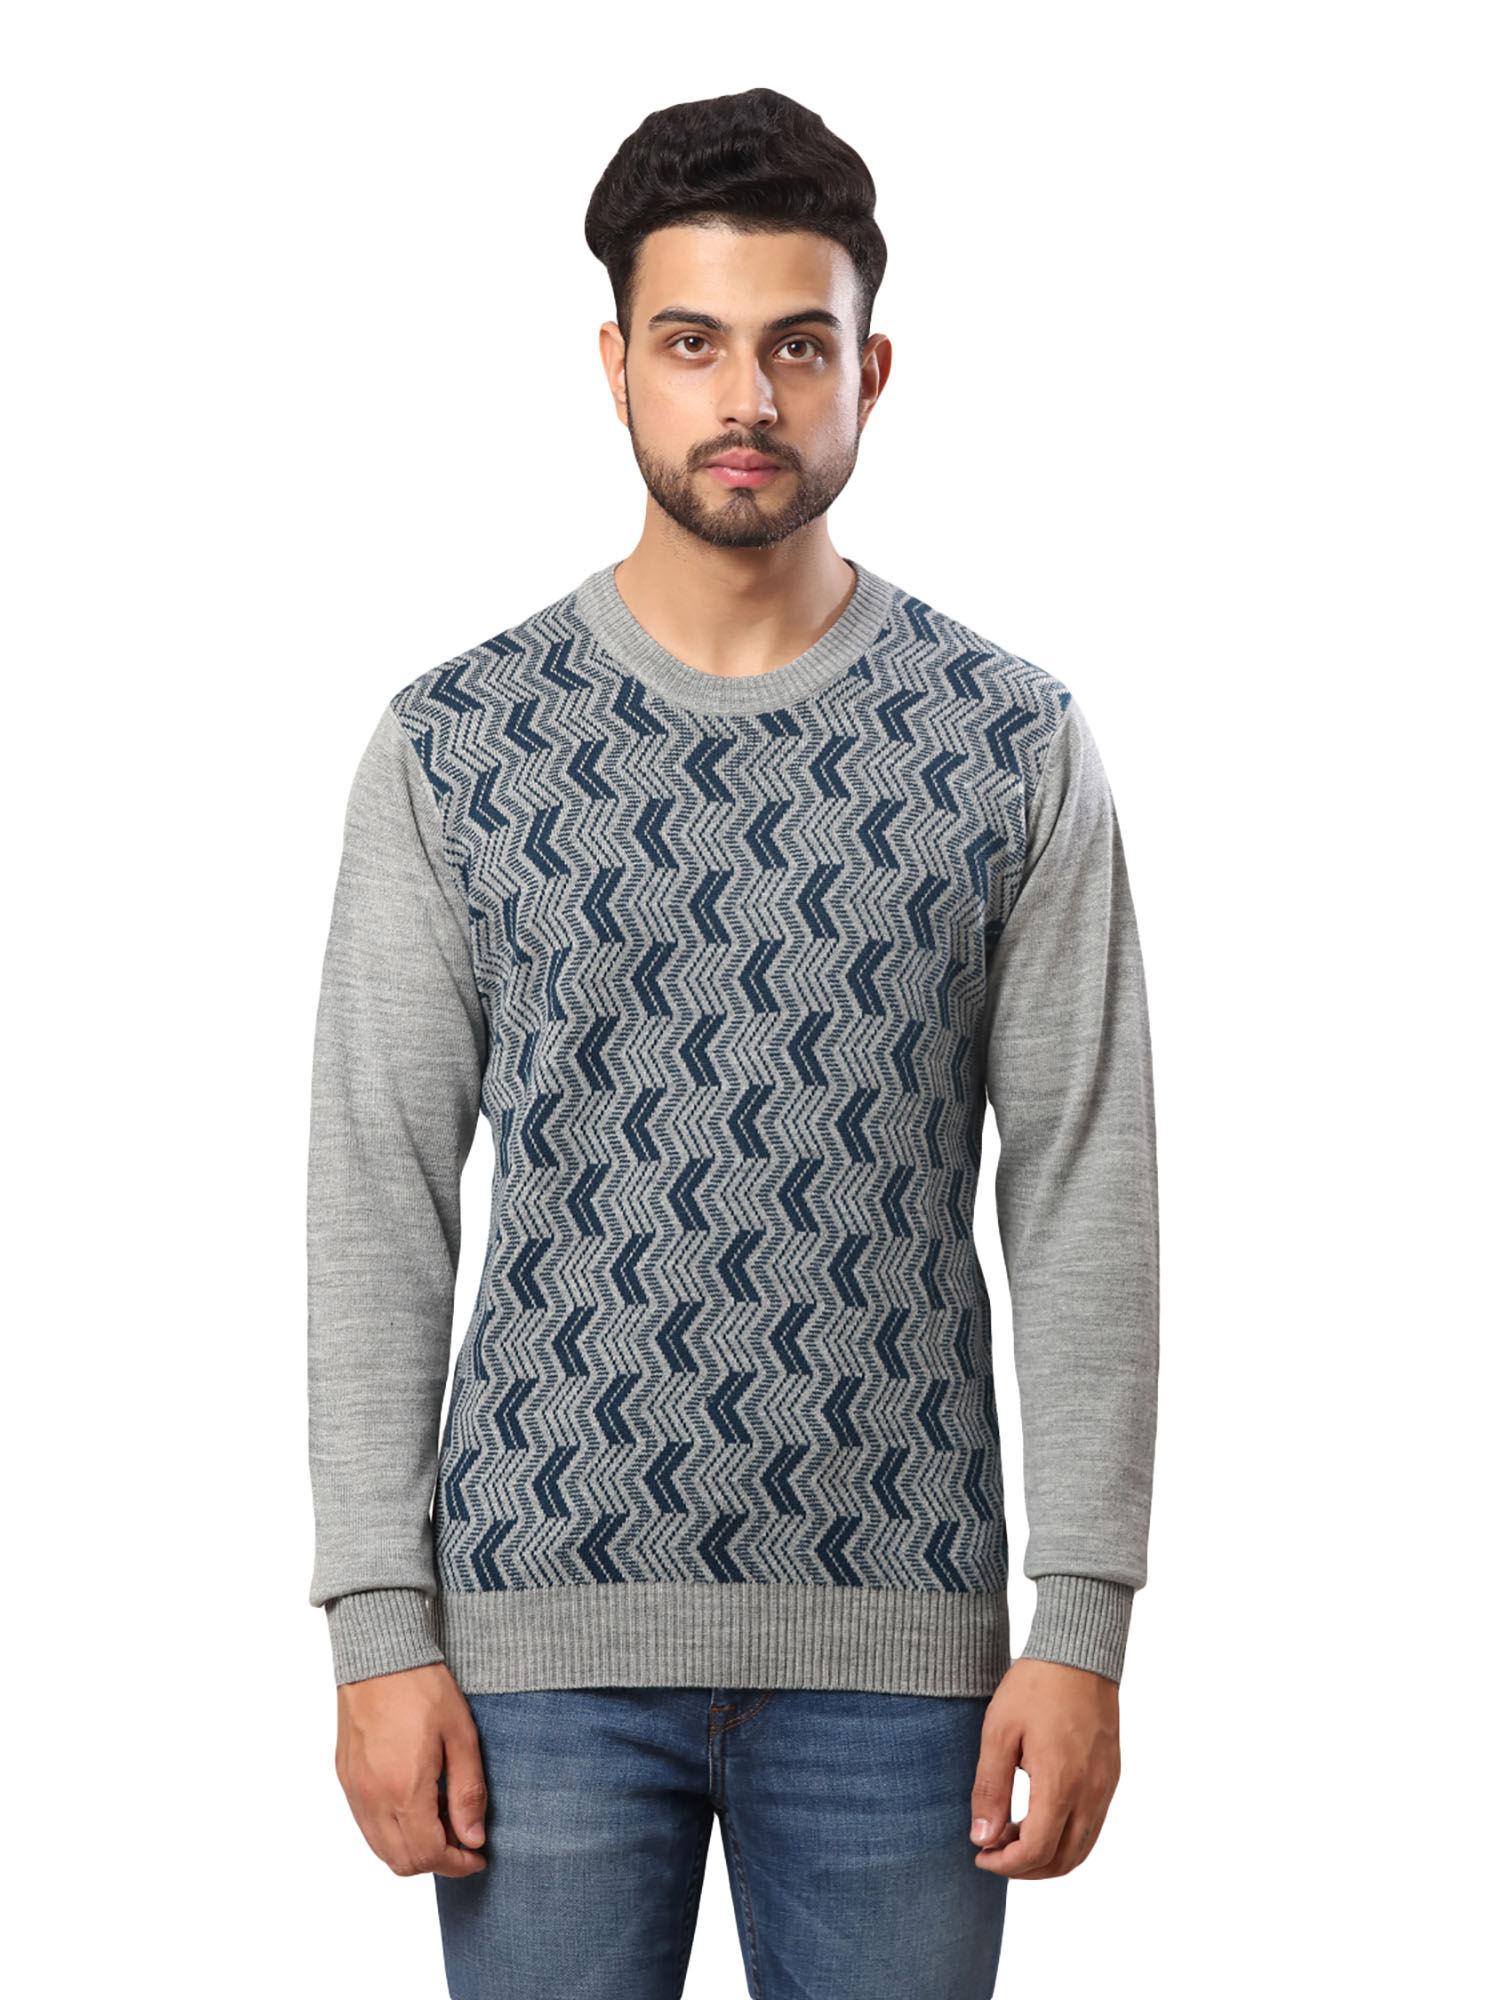 woven medium grey sweater